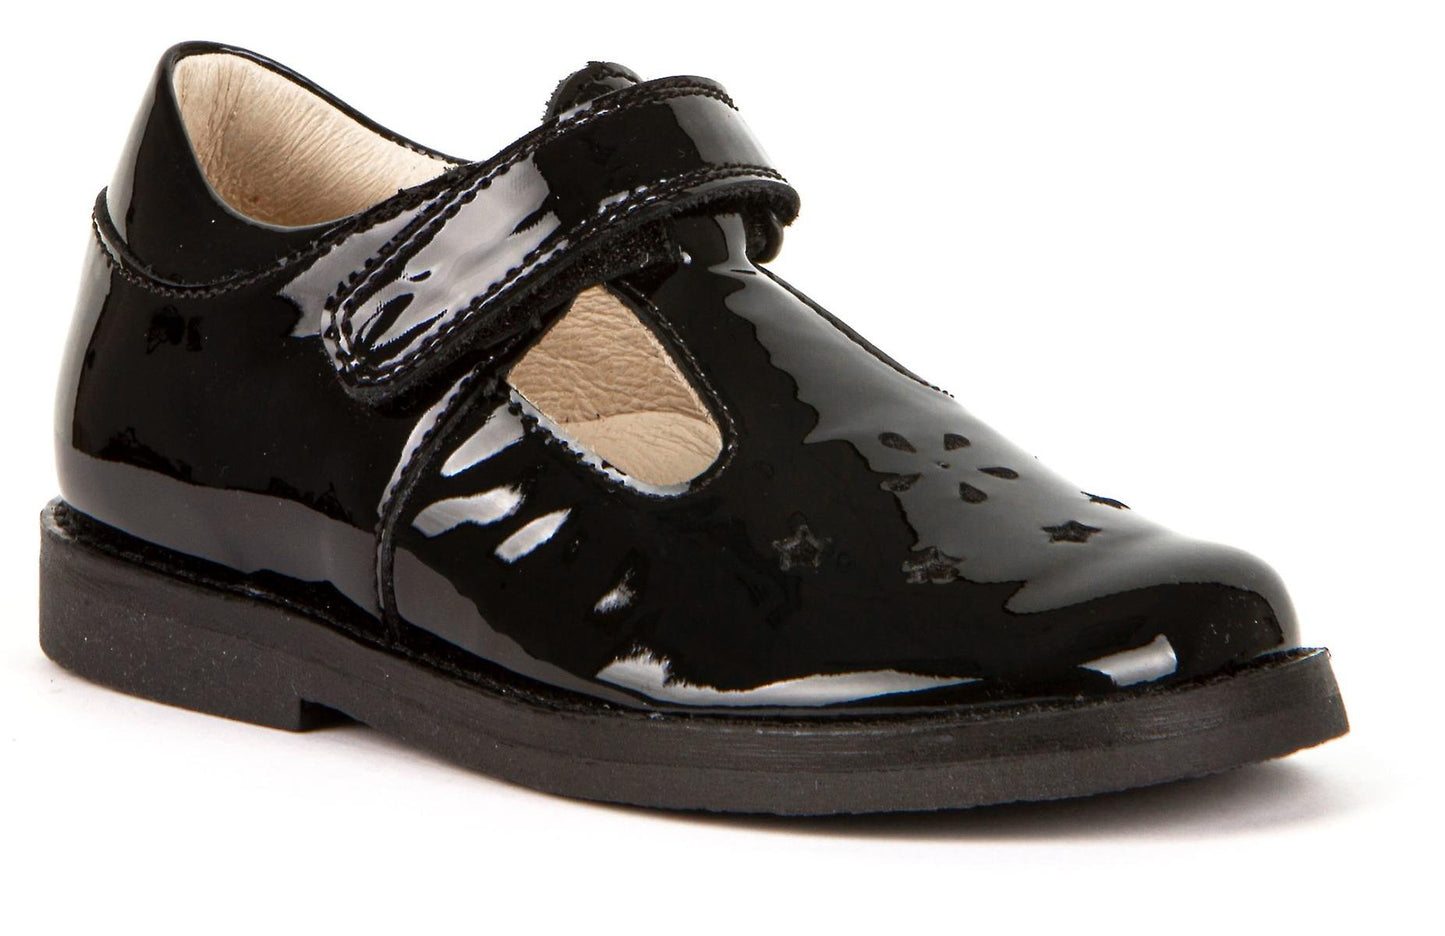 Froddo Black Patent Girls T-Bar School Shoes